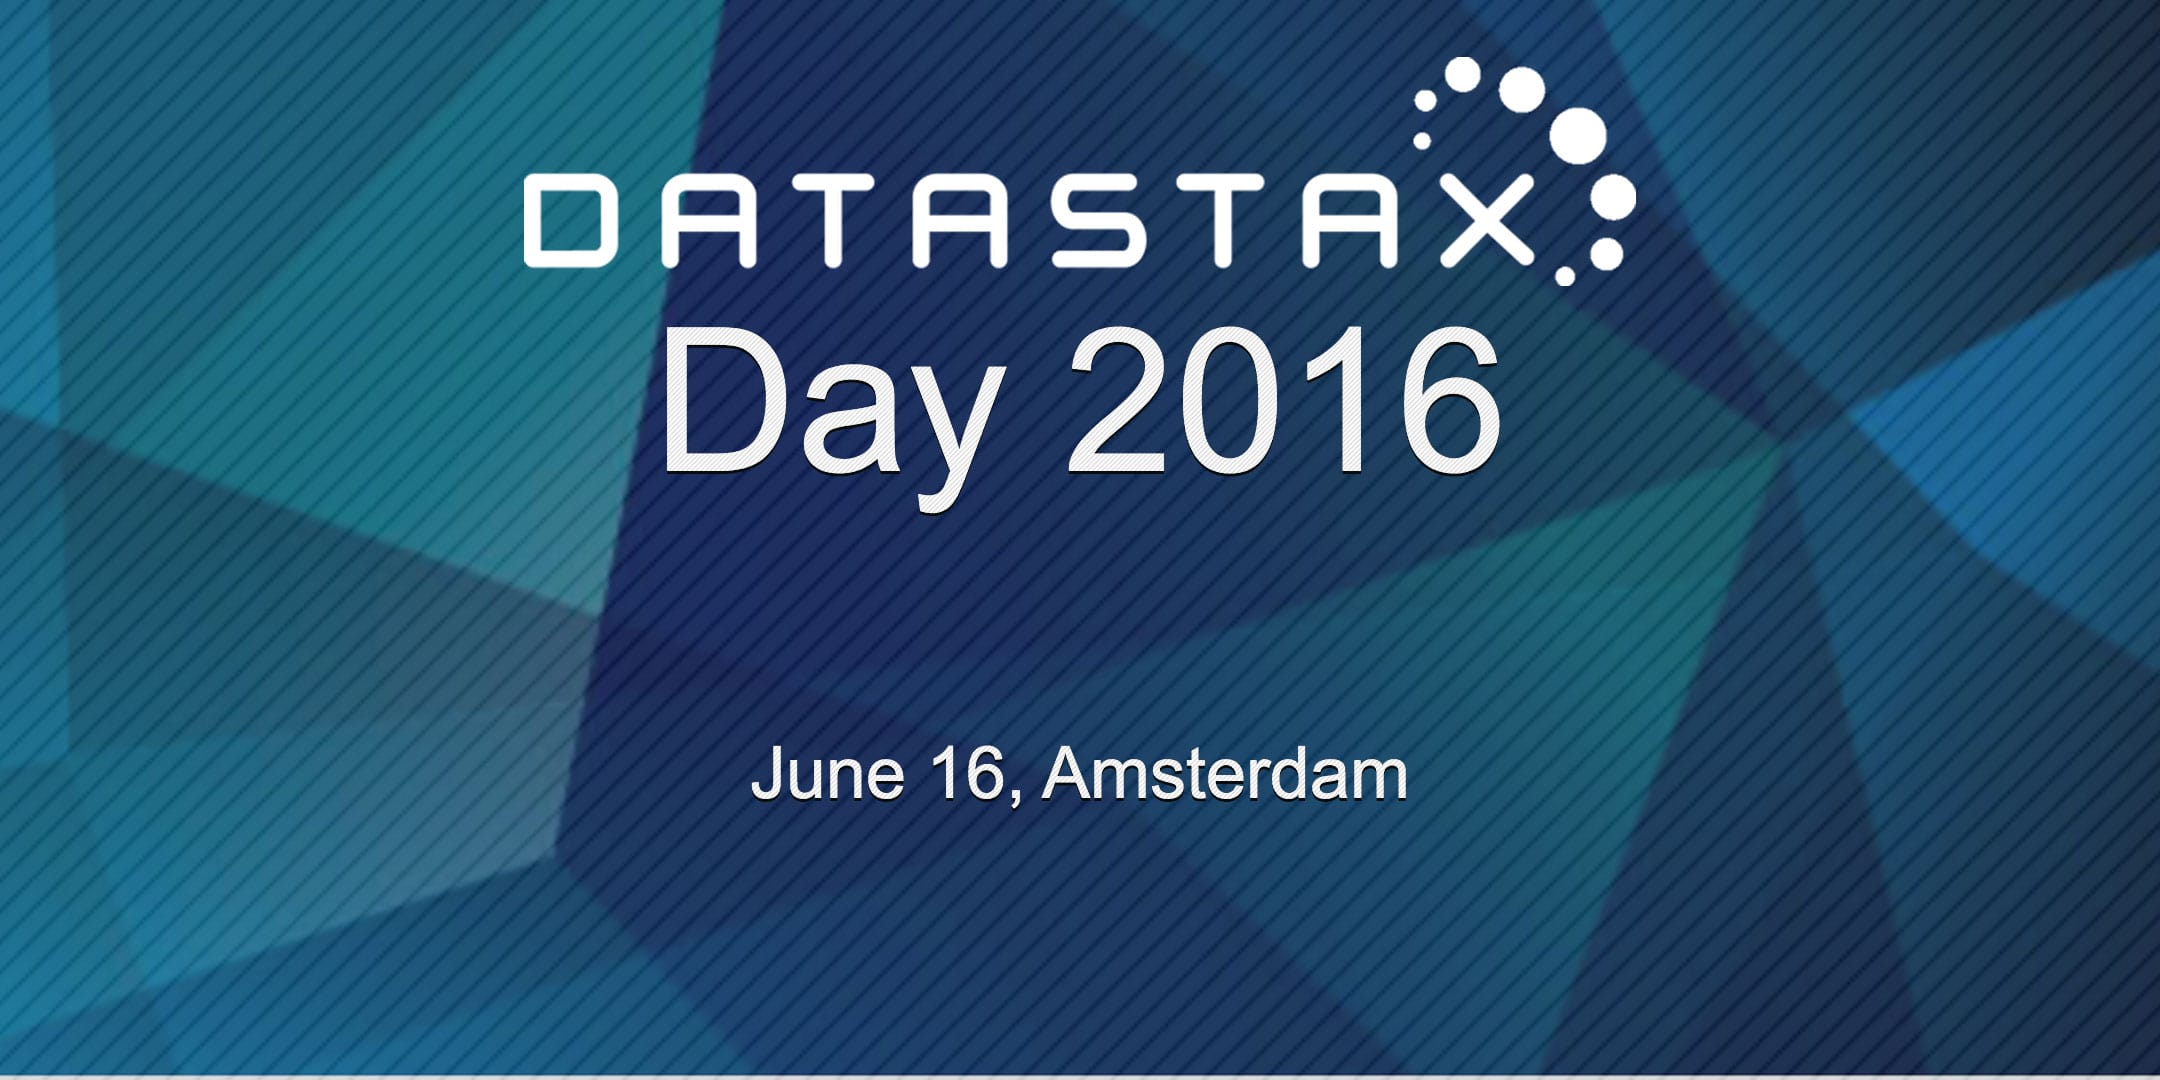 DataStax Day 2016